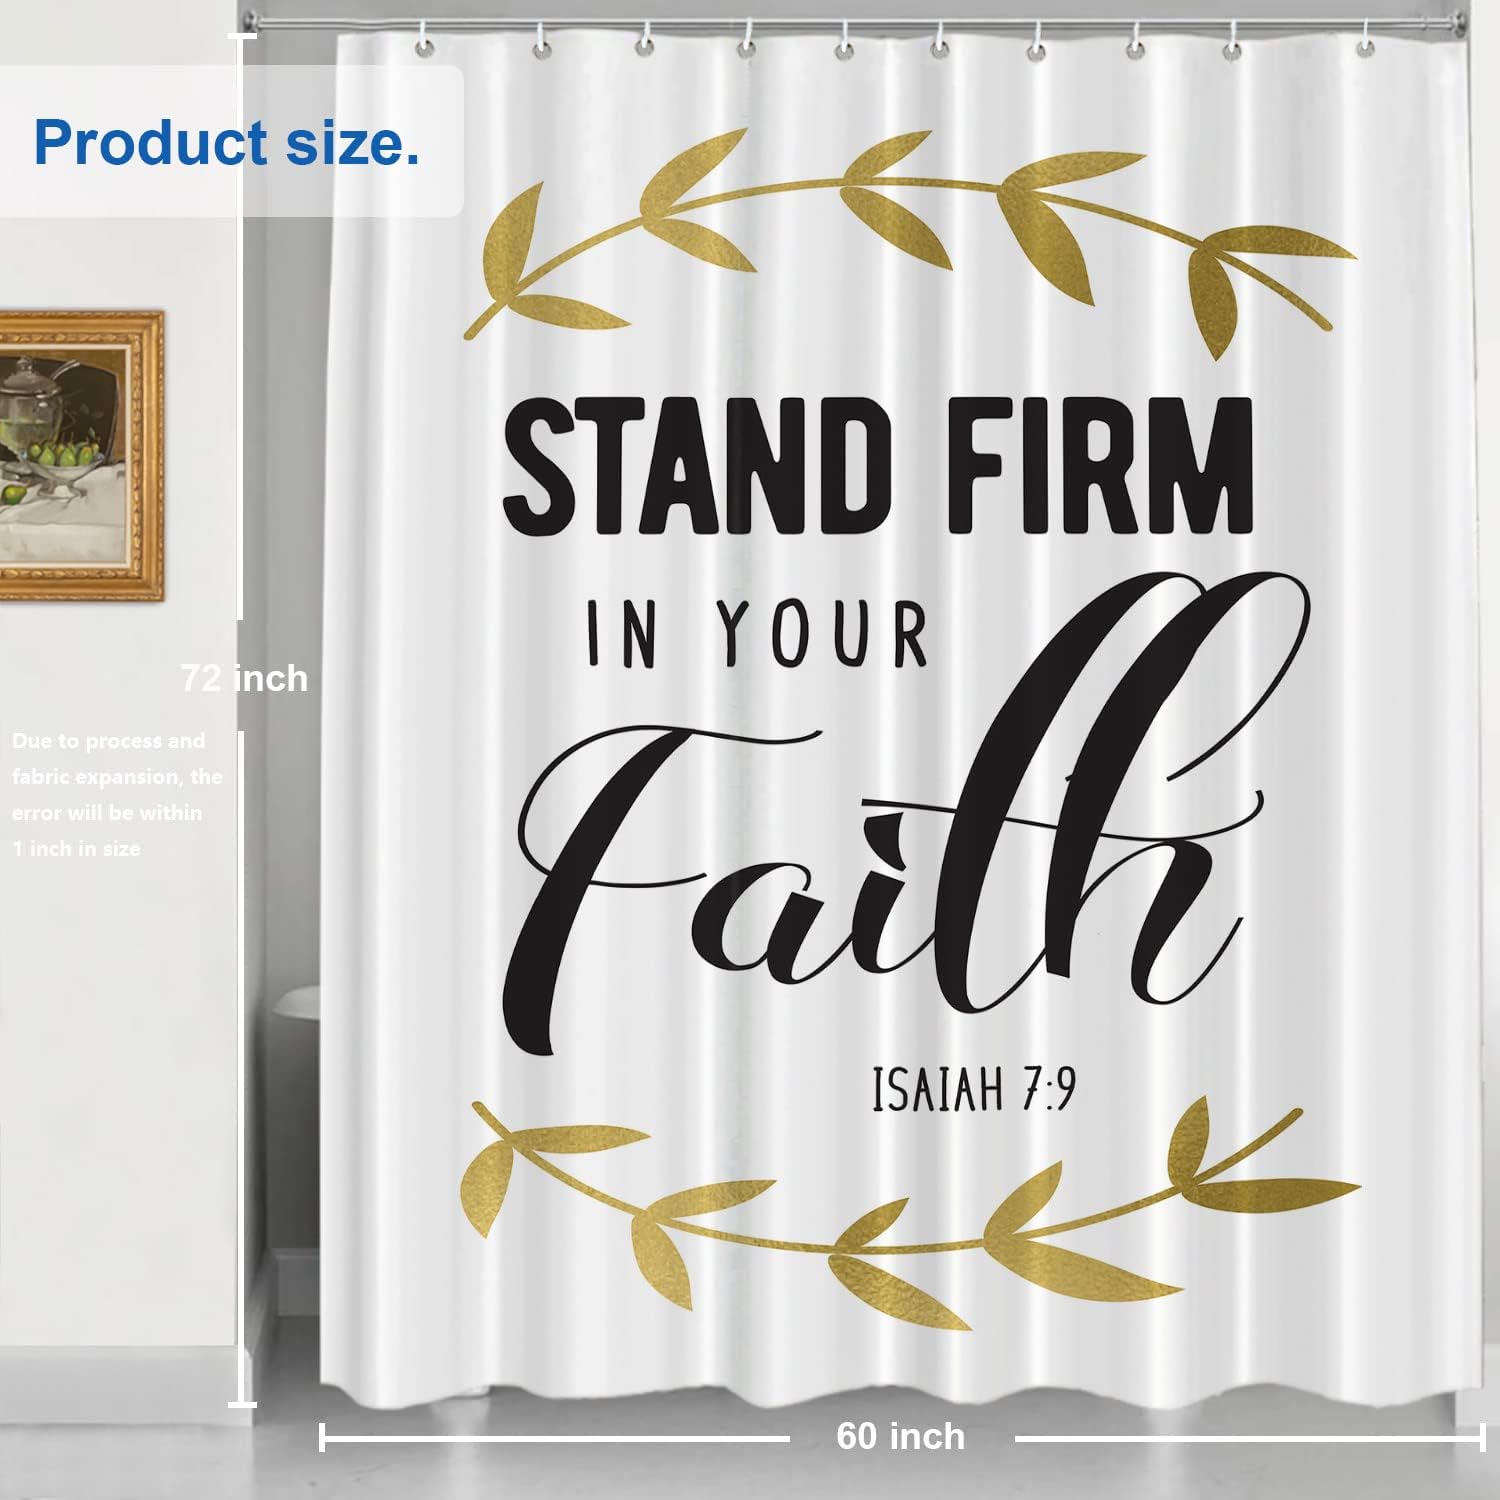 Stand Firm In Your Faith Christian Shower Curtain claimedbygoddesigns